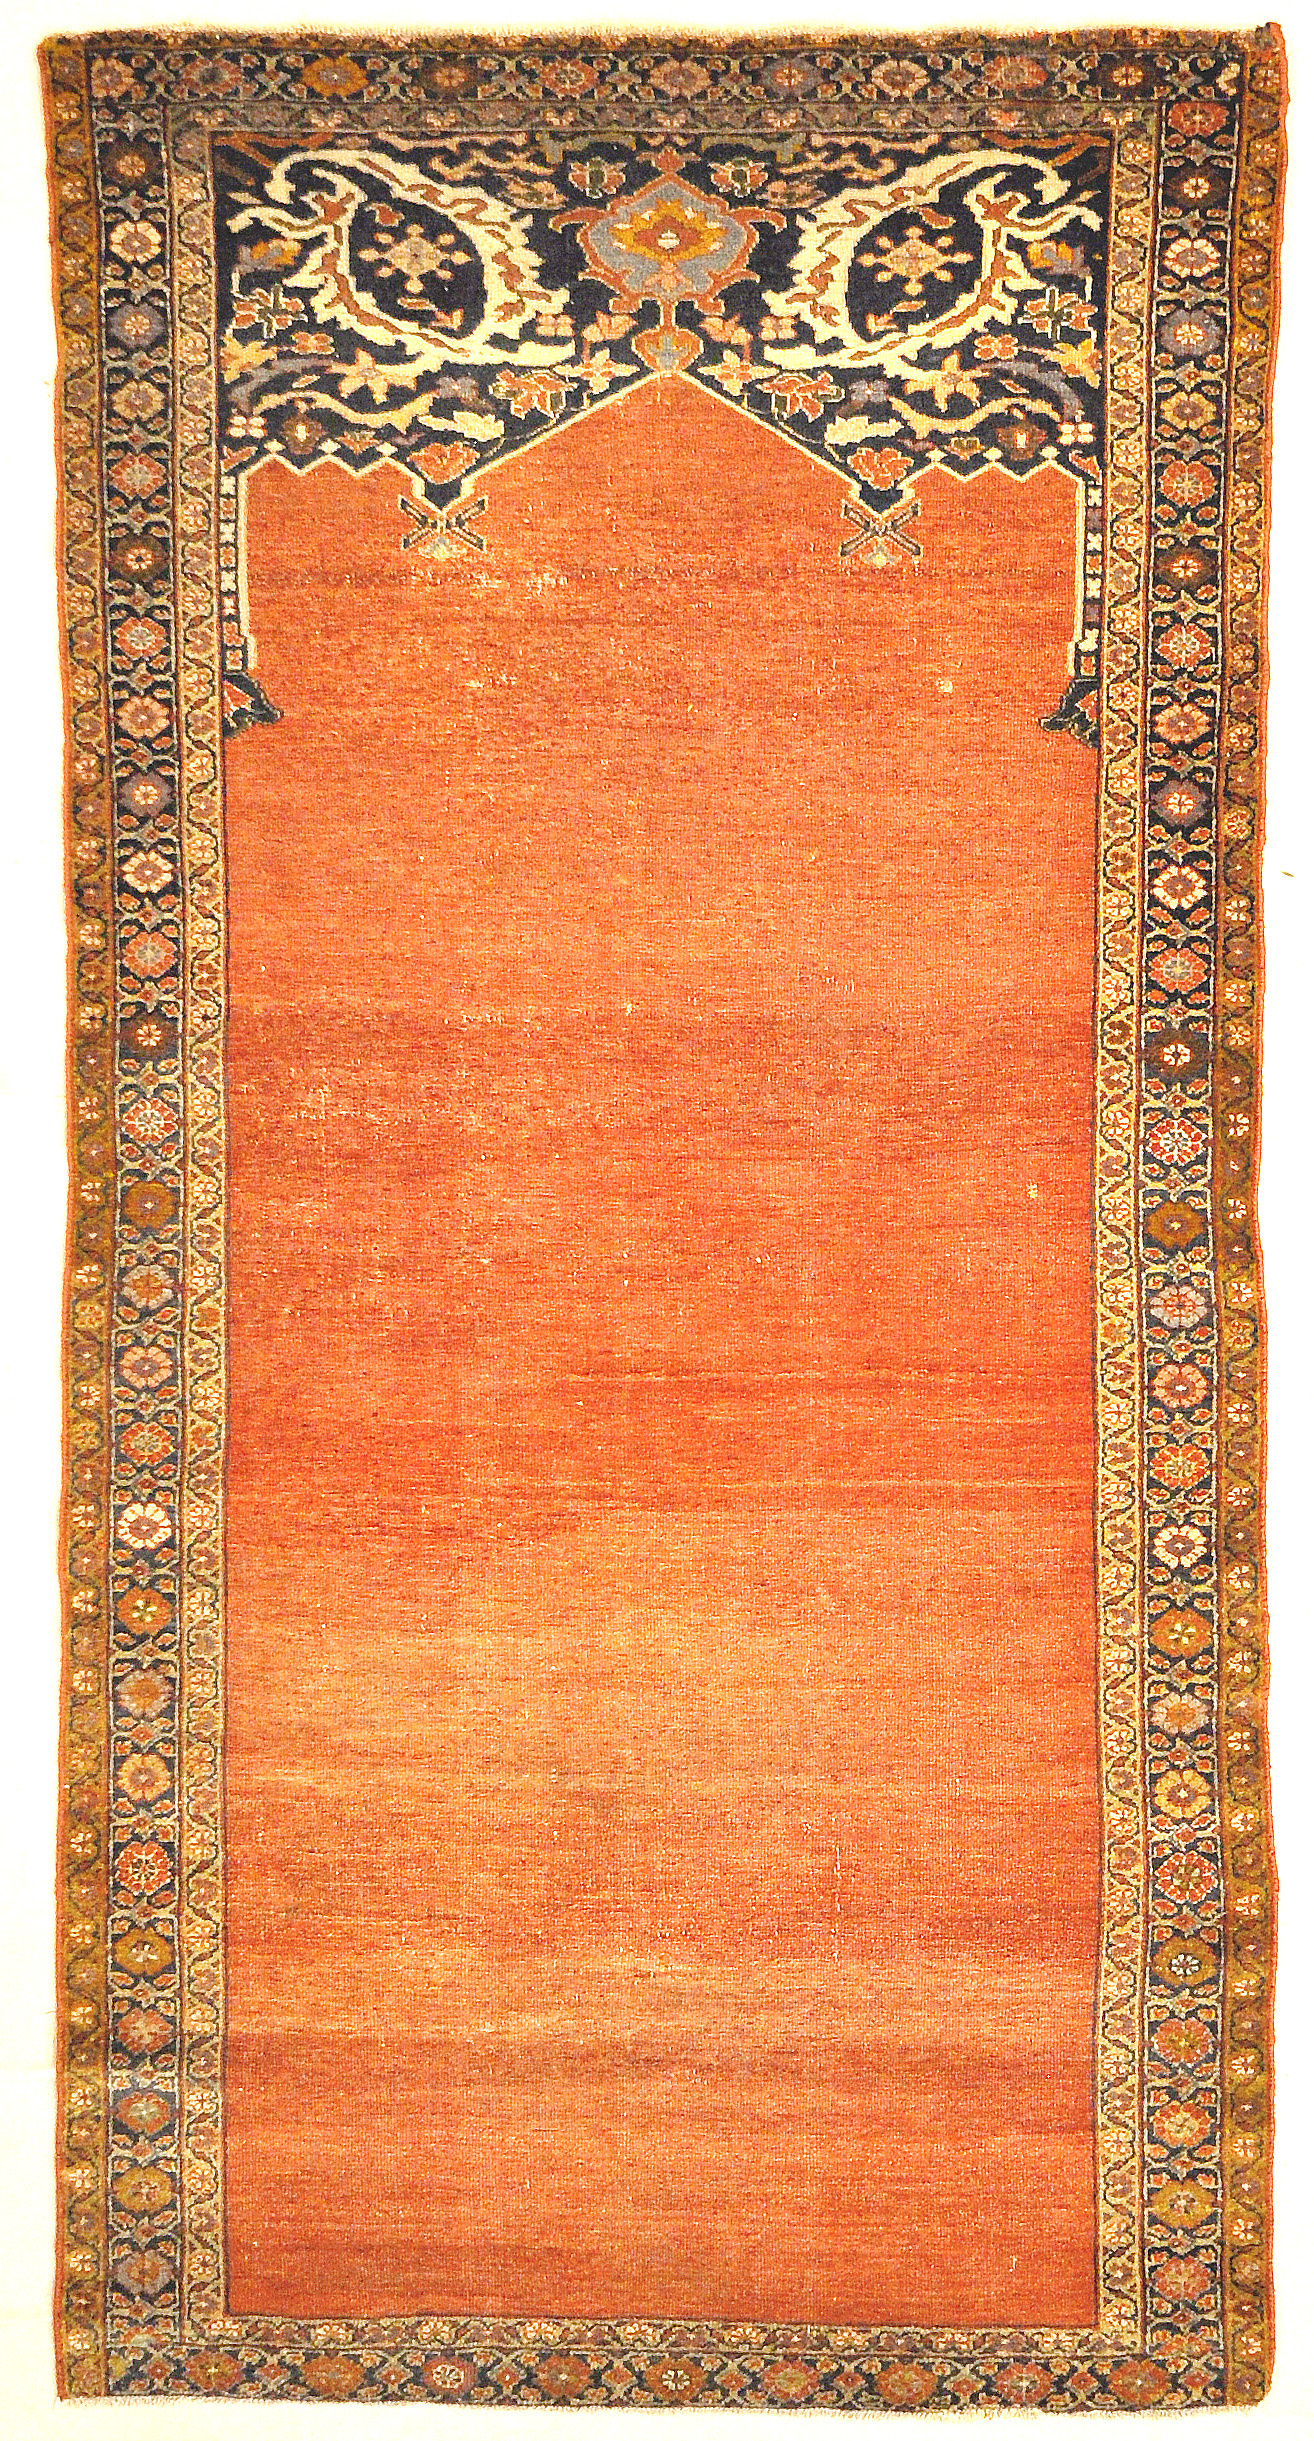 Antique Ziegler Sultanabad Rare Meditation Piece Genuine Authentic Woven Carpet Art Santa Barbara Design Center Rugs and More